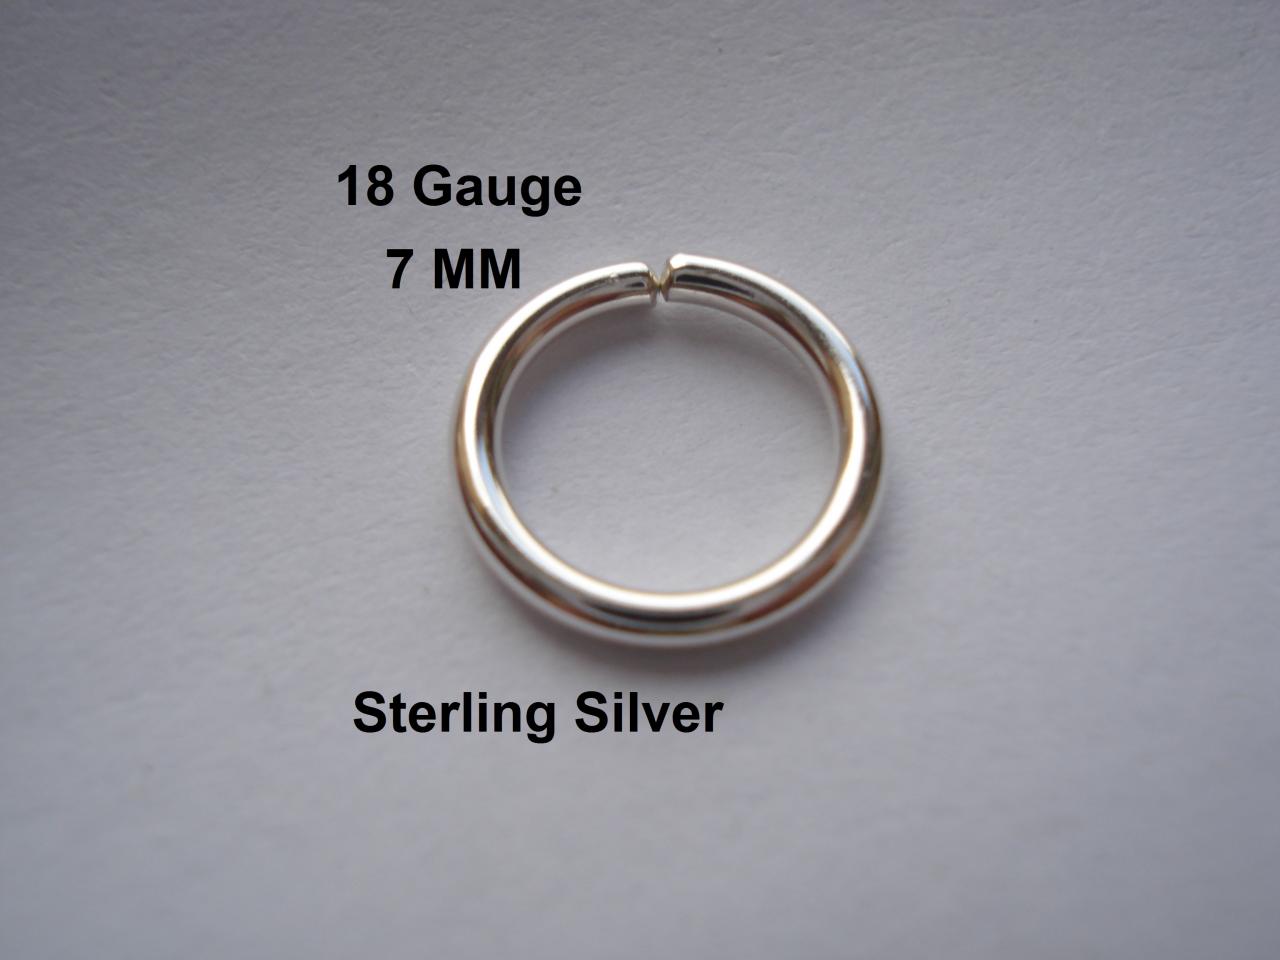 18g Gauge Sterling Silver, Septum/nose Ring/hoop Helix/earring/tragus,7 Mm Inner Diameter